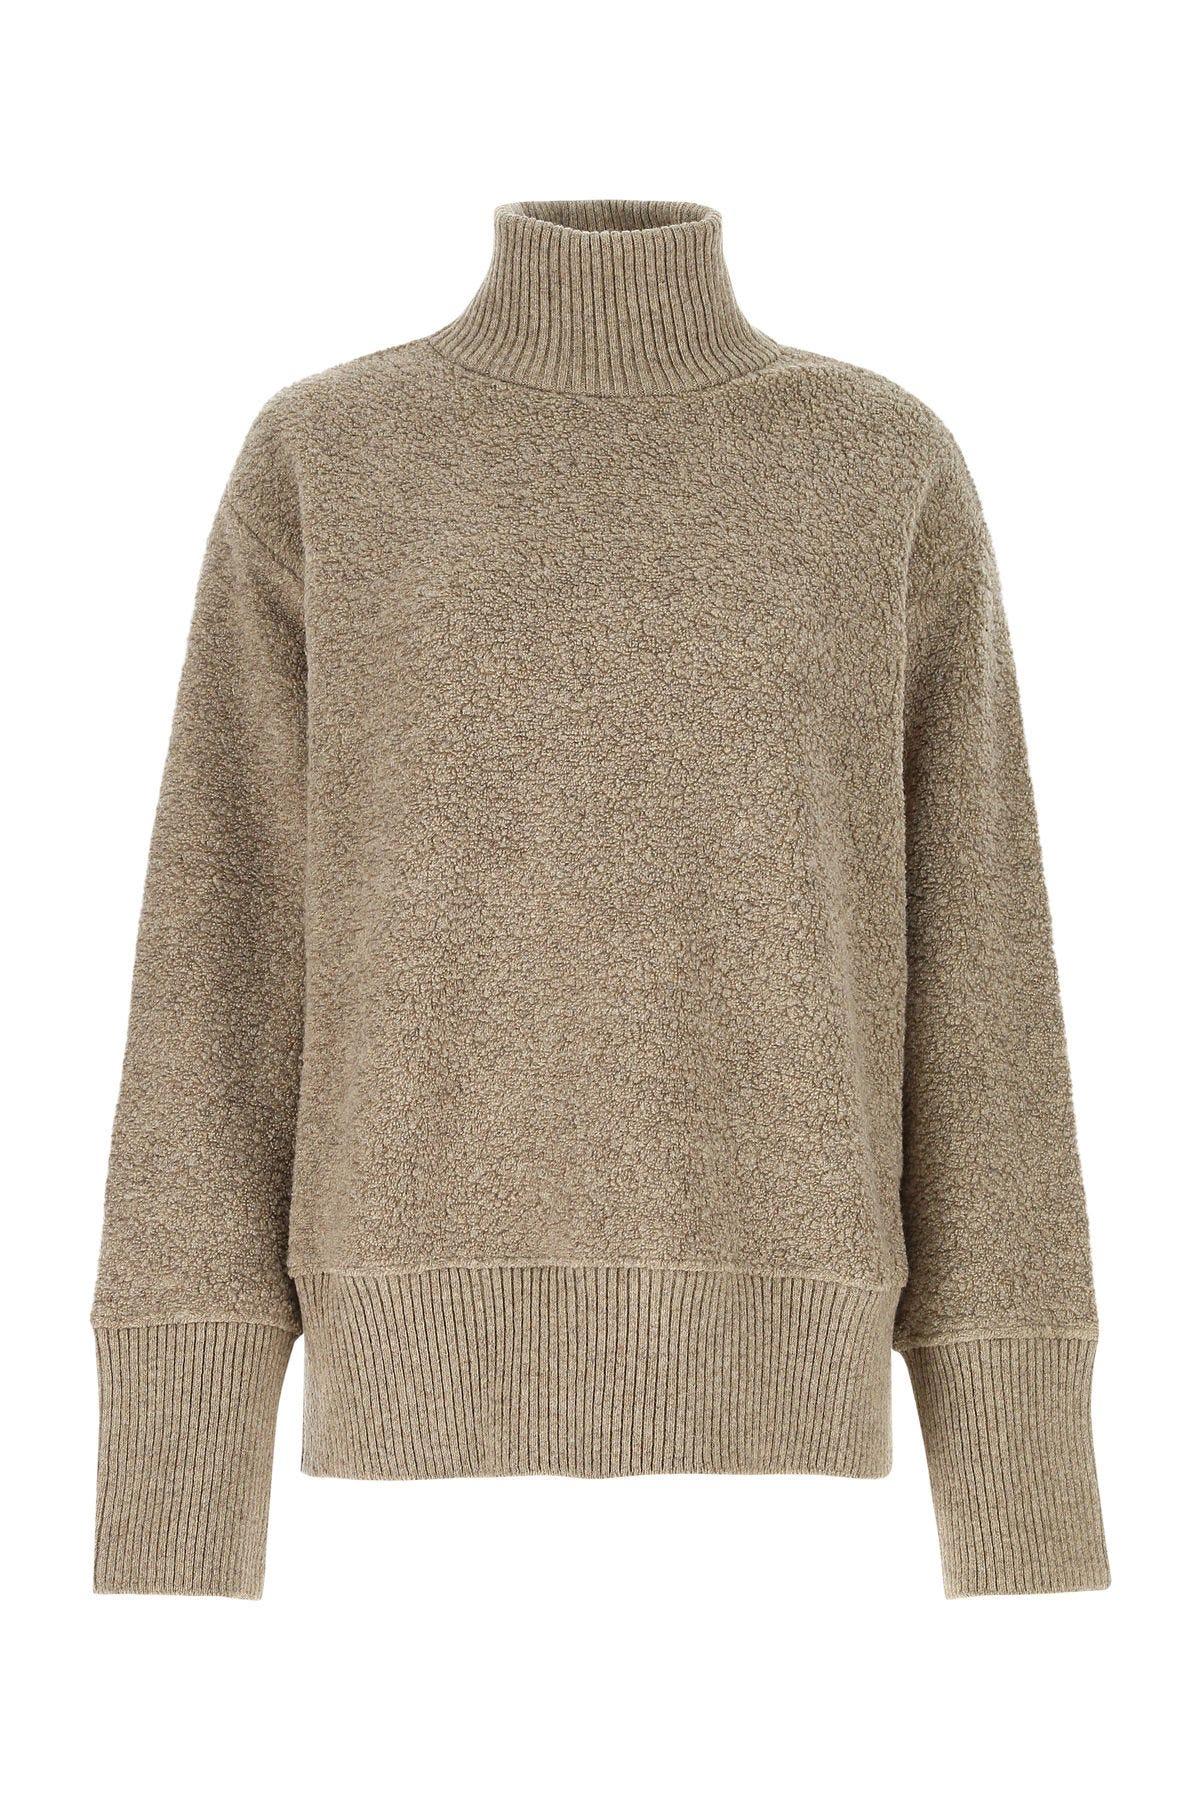 Jil Sander Dove Grey Terry Fabric Oversize Sweater